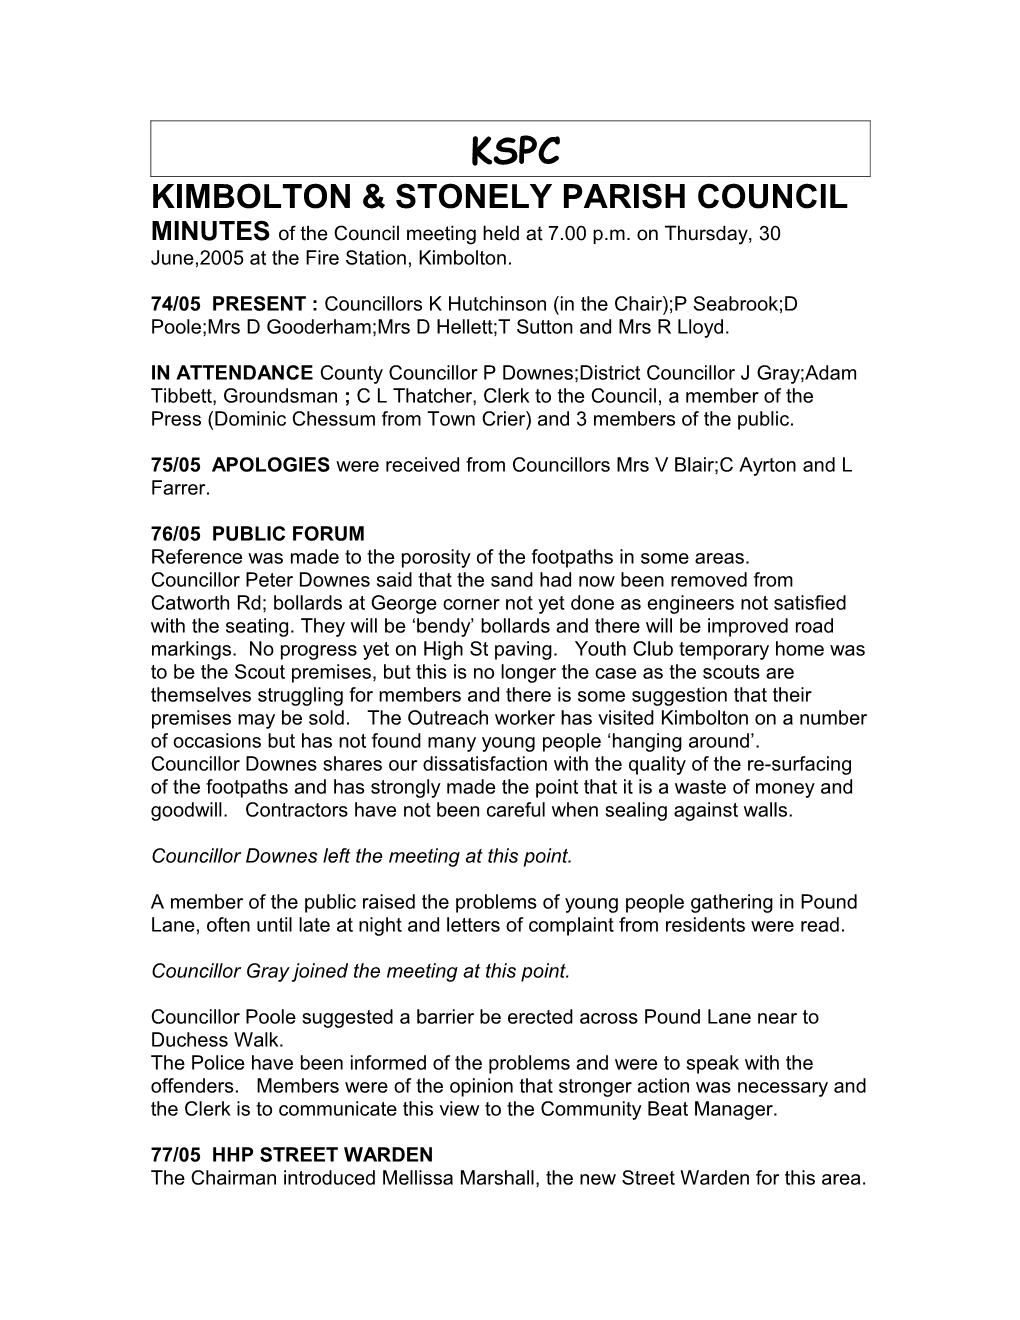 Kimbolton & Stonely Parish Council s5